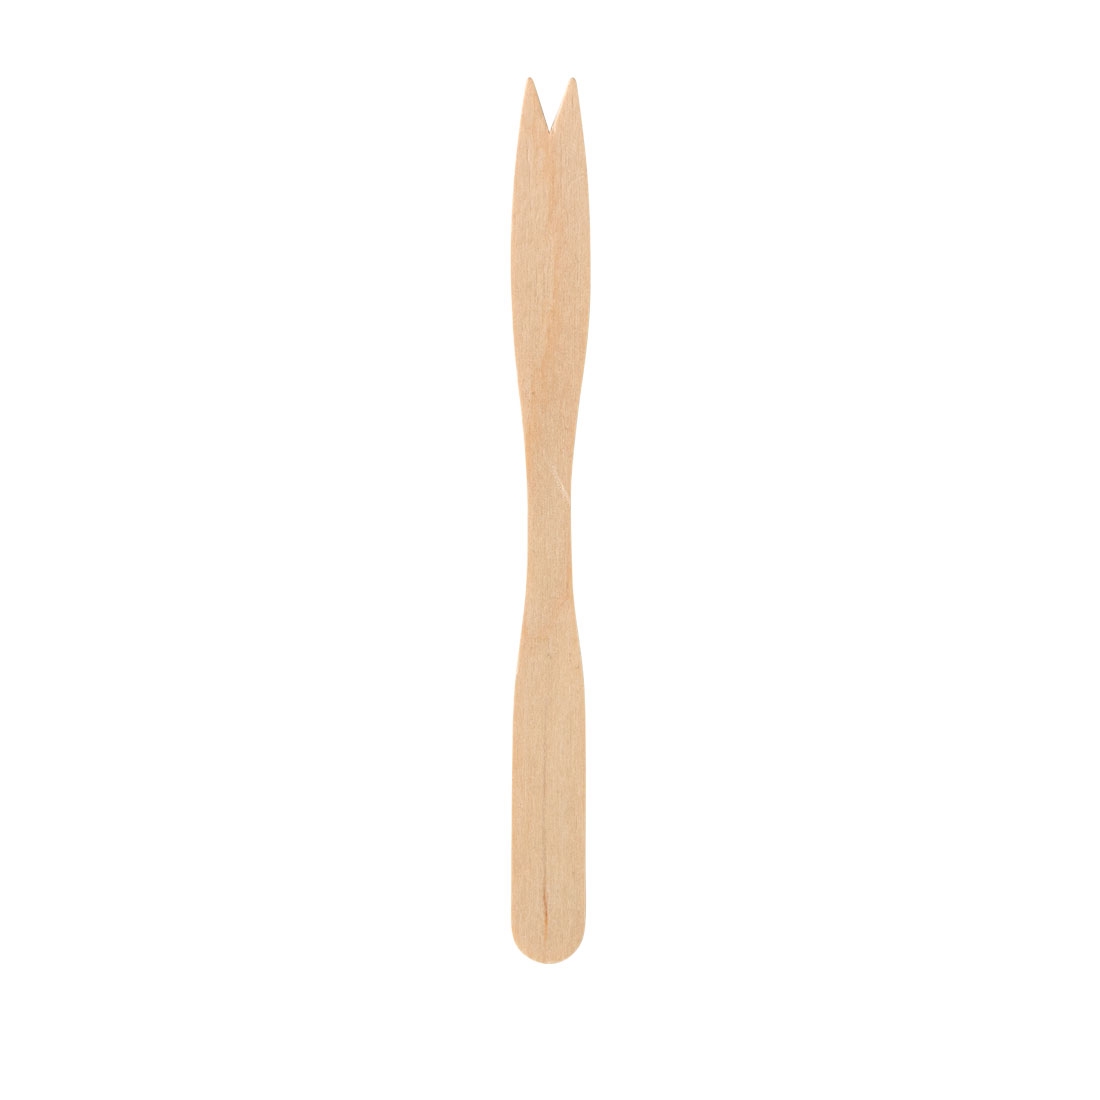 Truewood Frietvork extra lang hout (14cm) - 1000 stuks